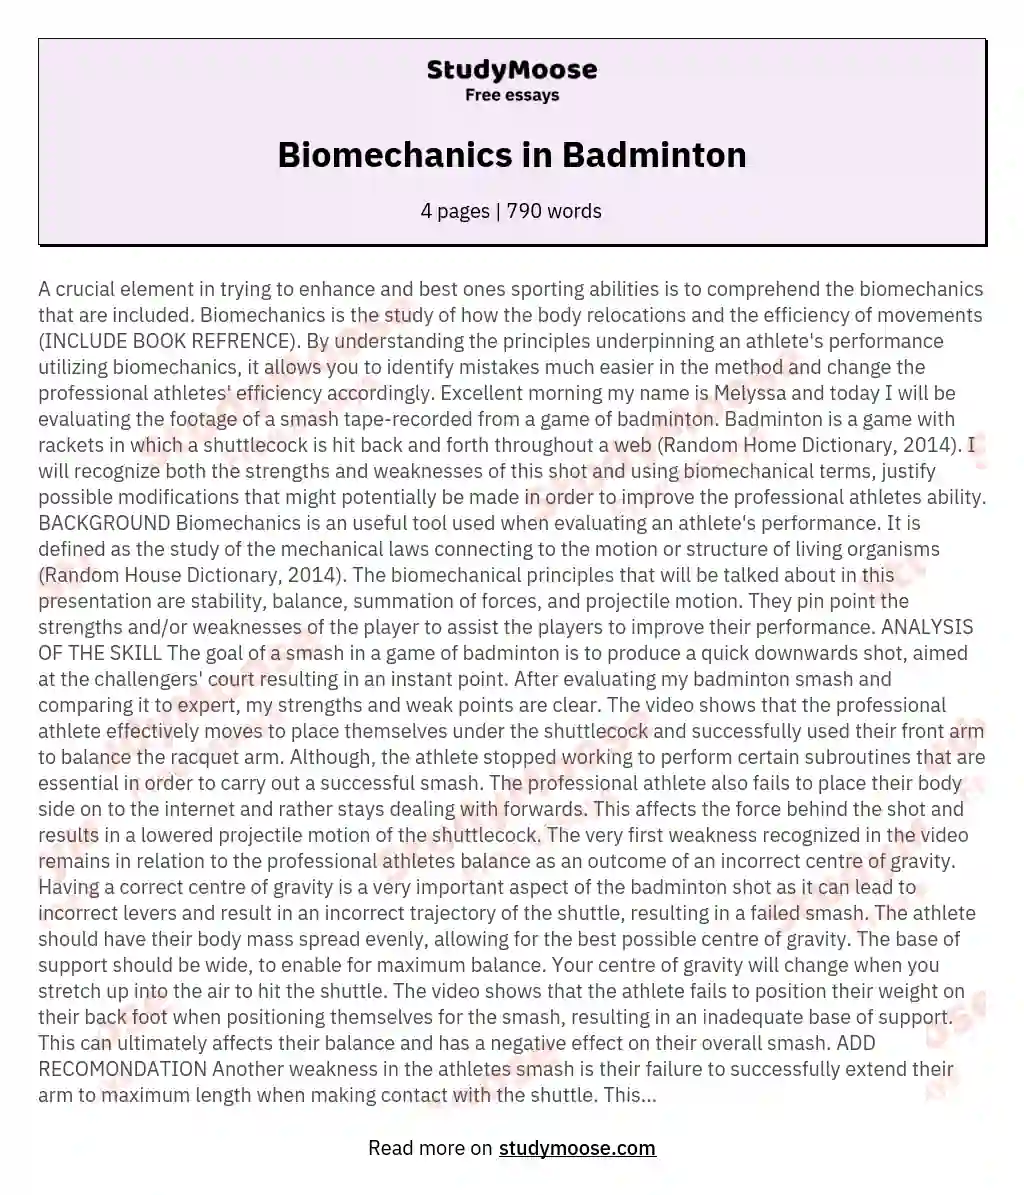 Biomechanics in Badminton essay